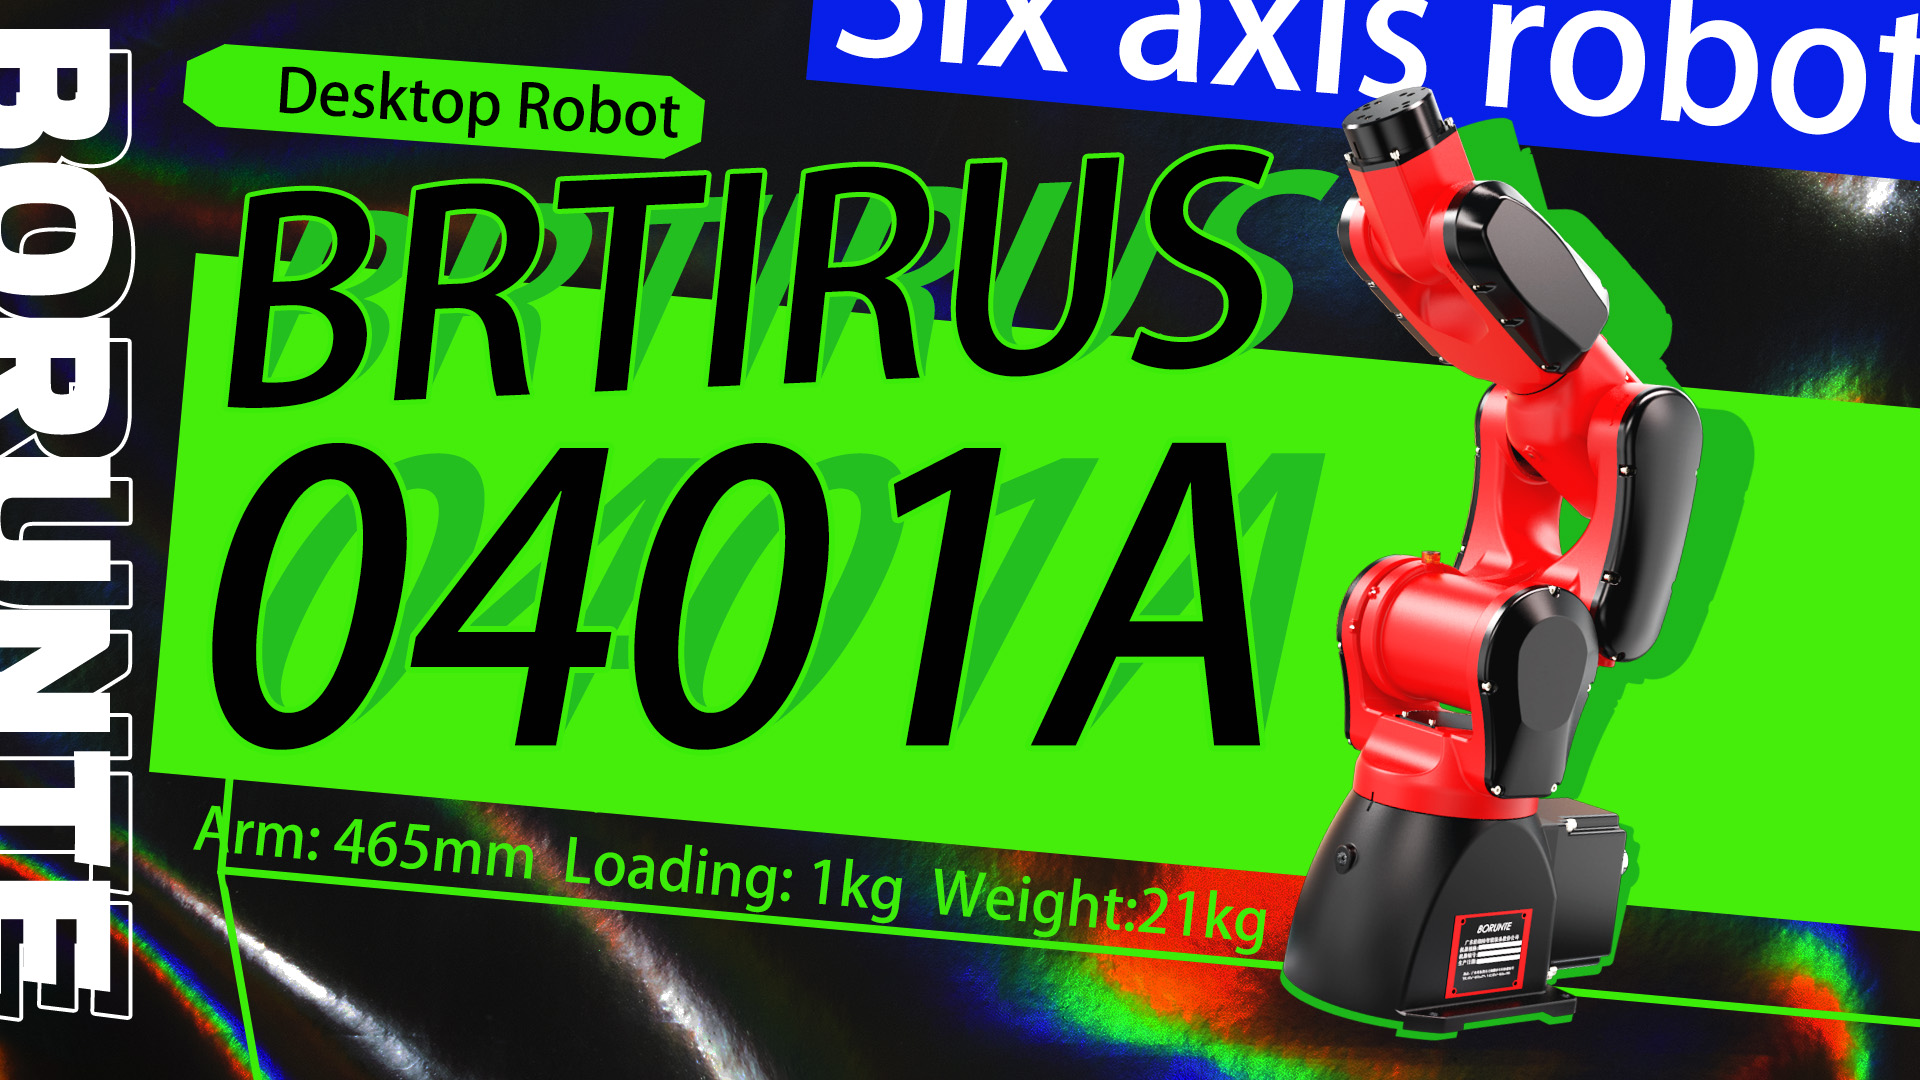 BRTIRUS0401A robot introduction pic